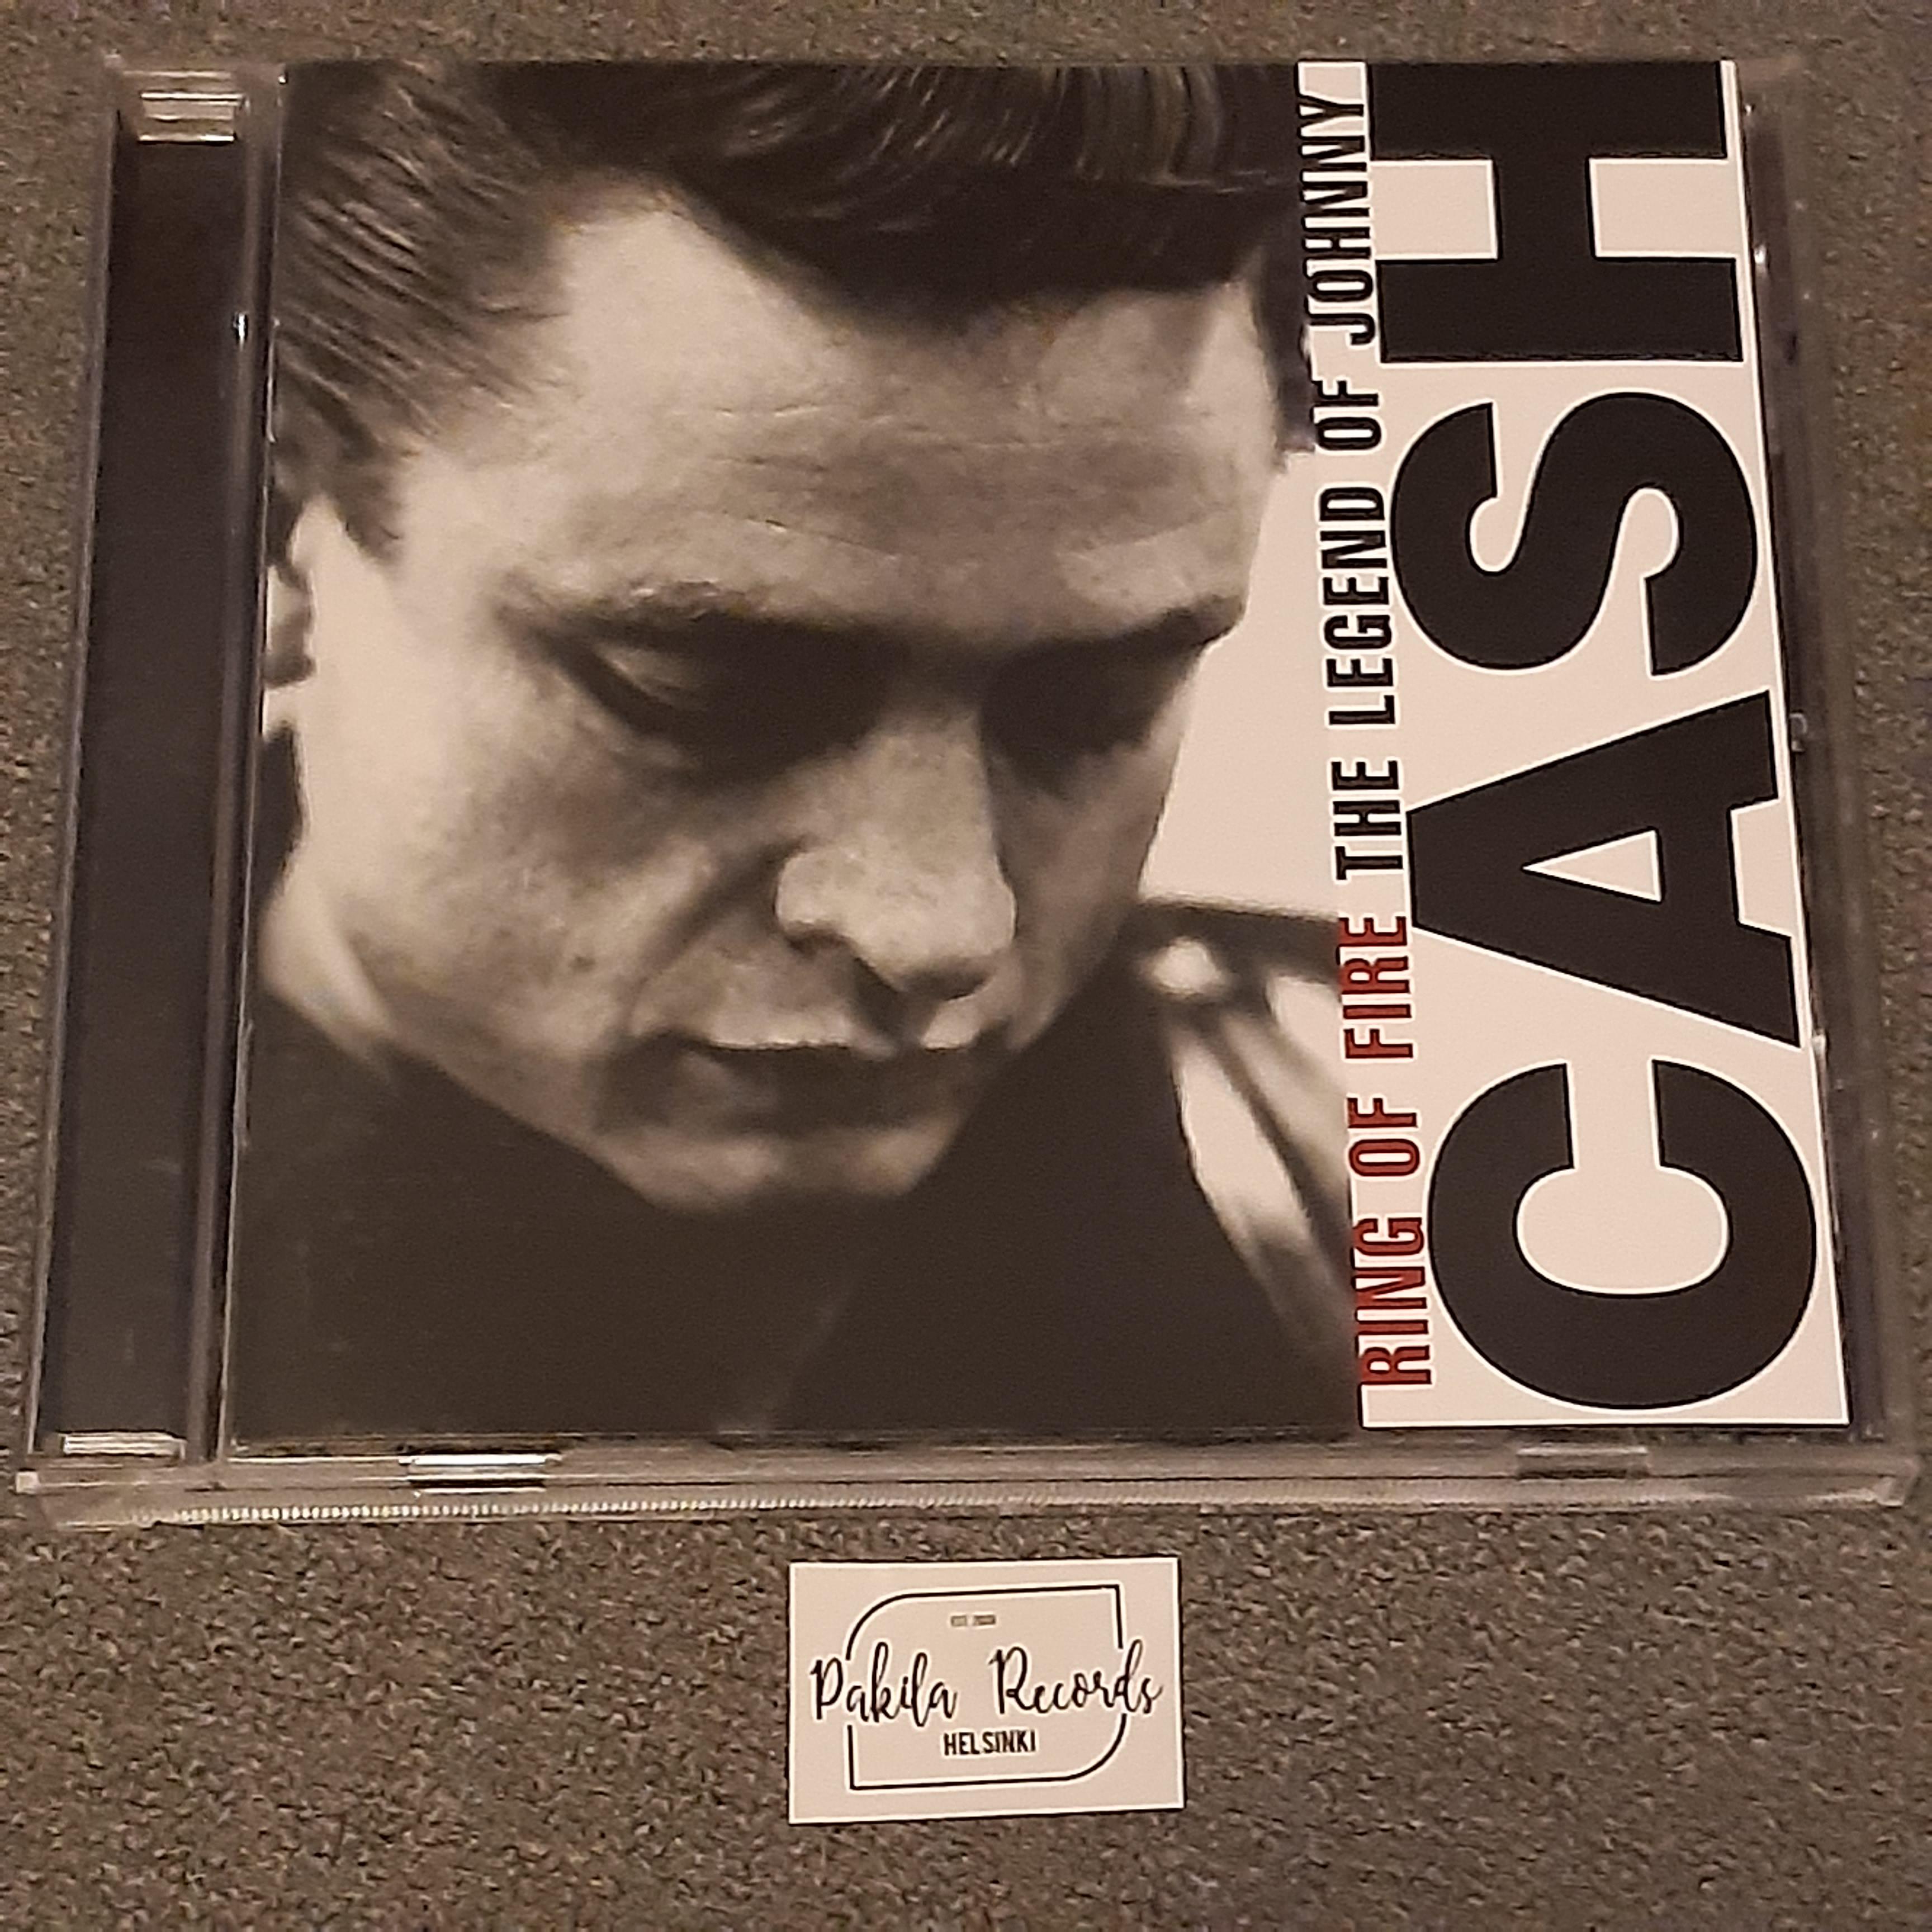 Johnny Cash - Ring Of Fire, The Legend Of Johnny Cash - CD (käytetty)